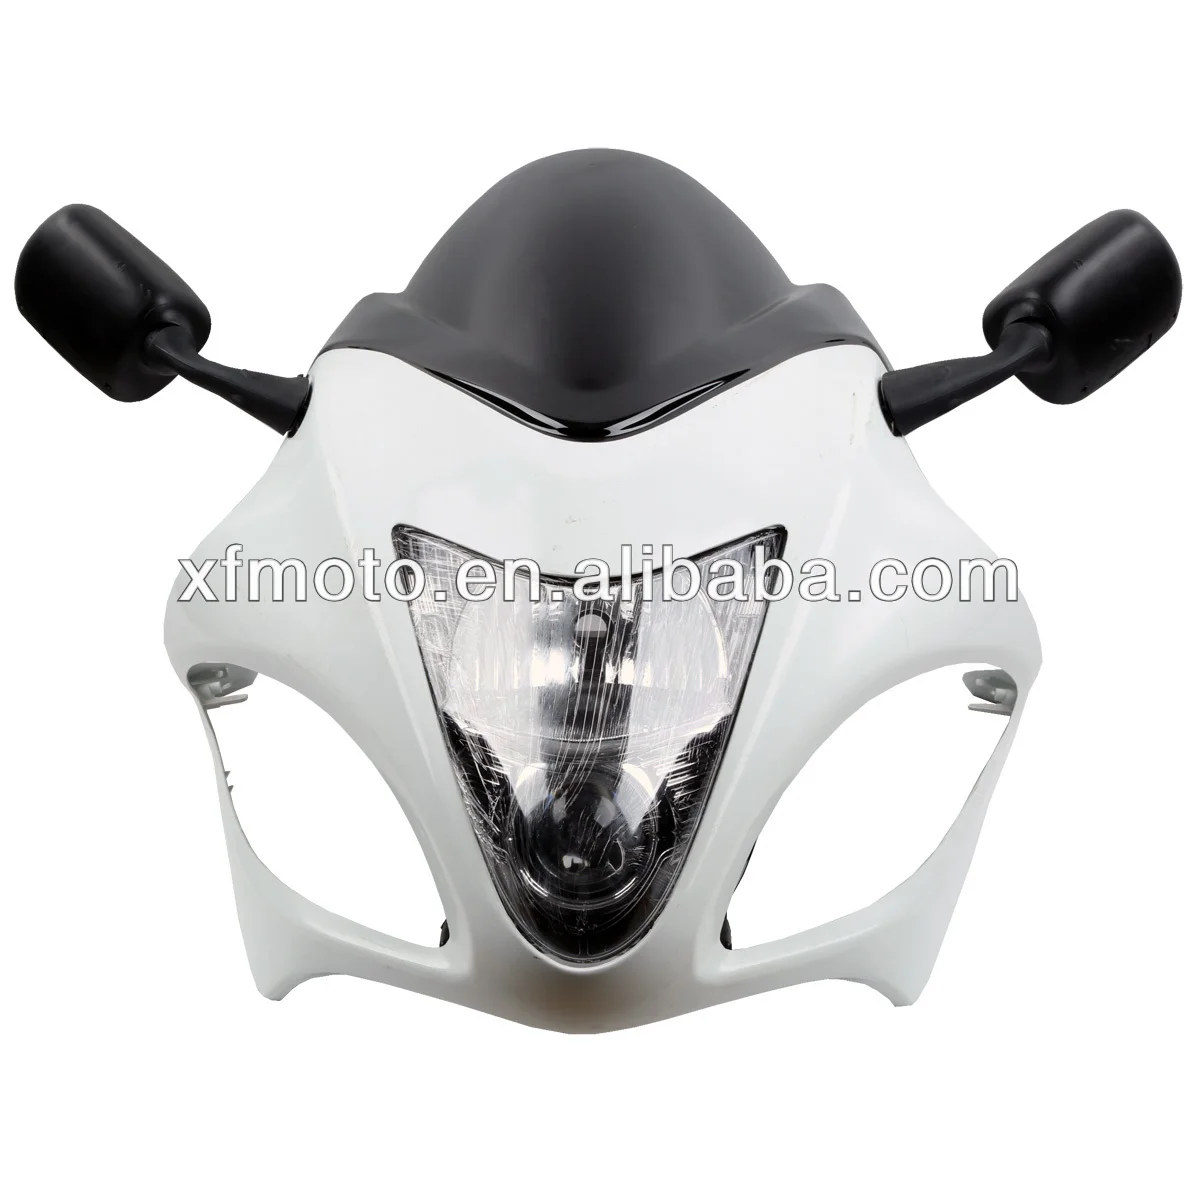 For Suzuki Hayabusa/GSX1300R 08-12 motorcycle Headlight,upper fairing,mirror,Windscreen